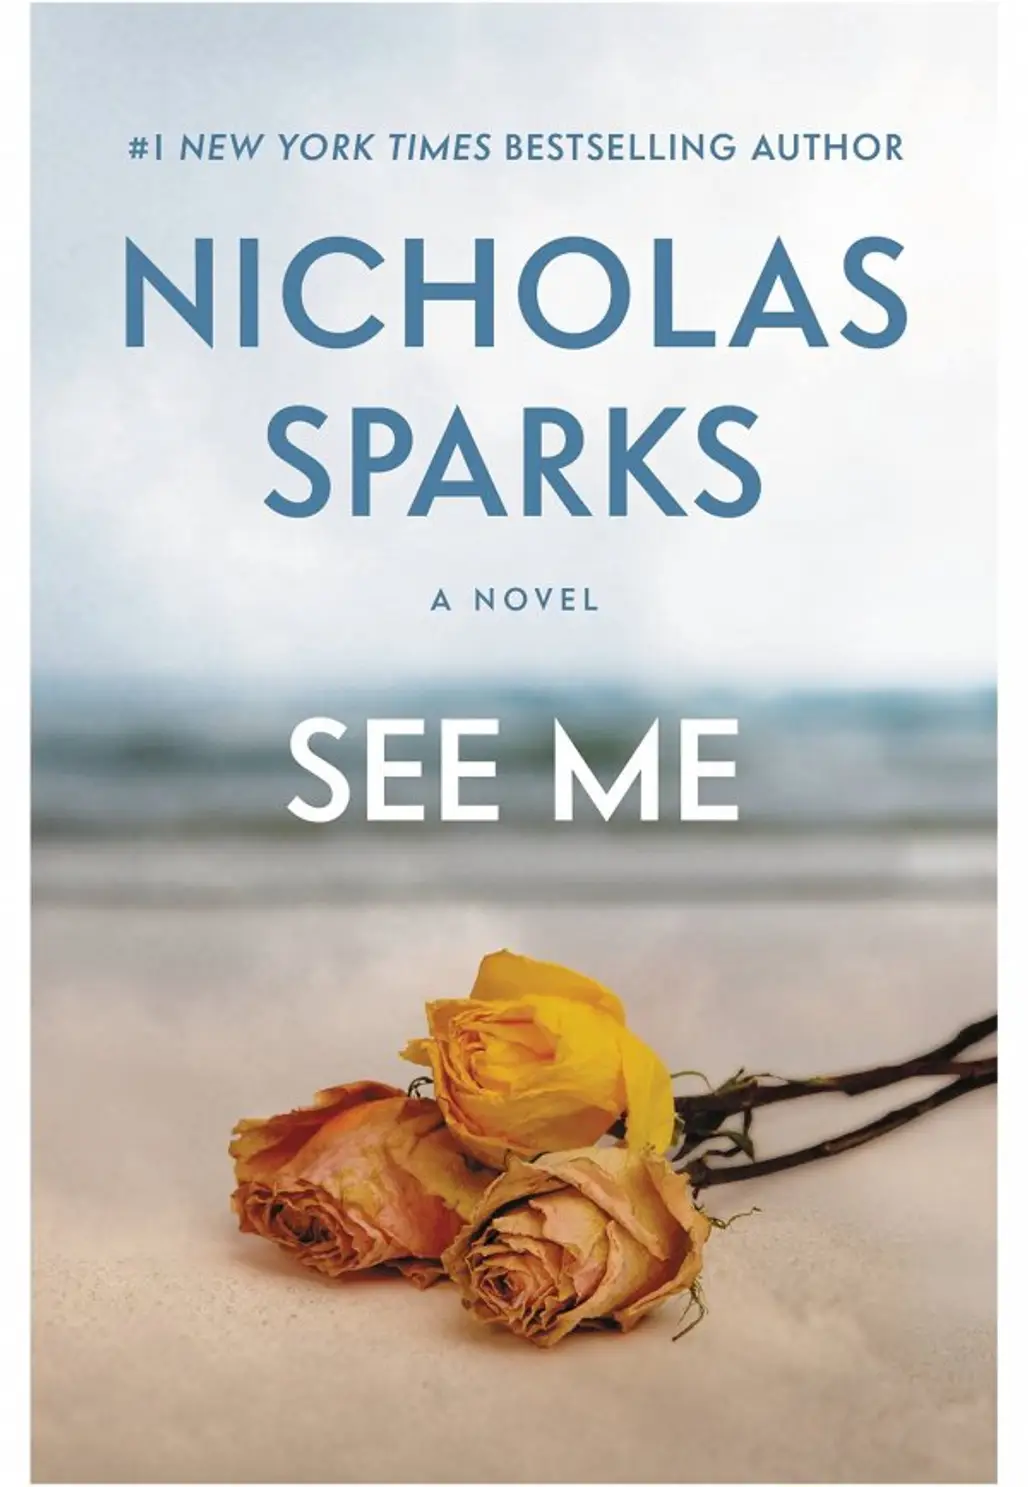 SEE ME by Nicholas Sparks